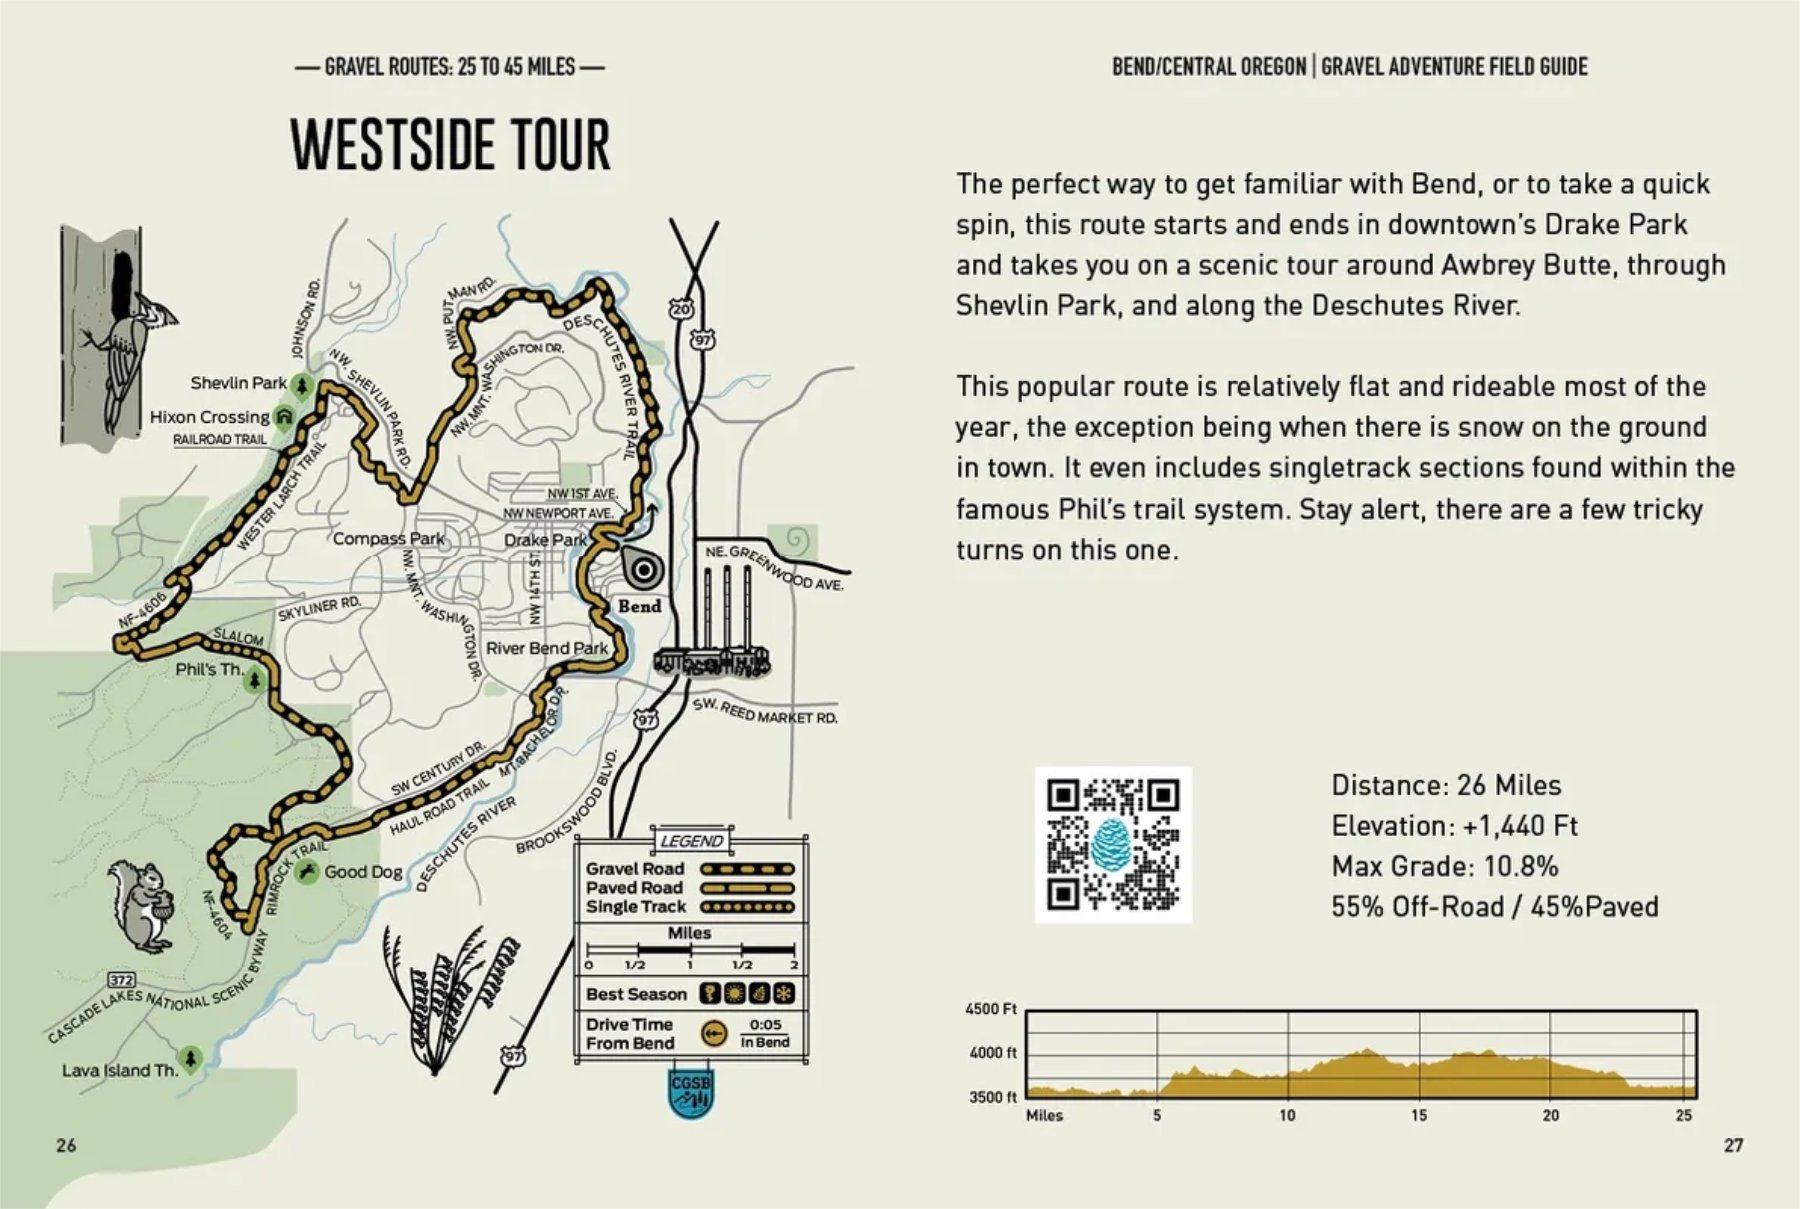 gravel adventure field guide bend_westside tour route.jpg